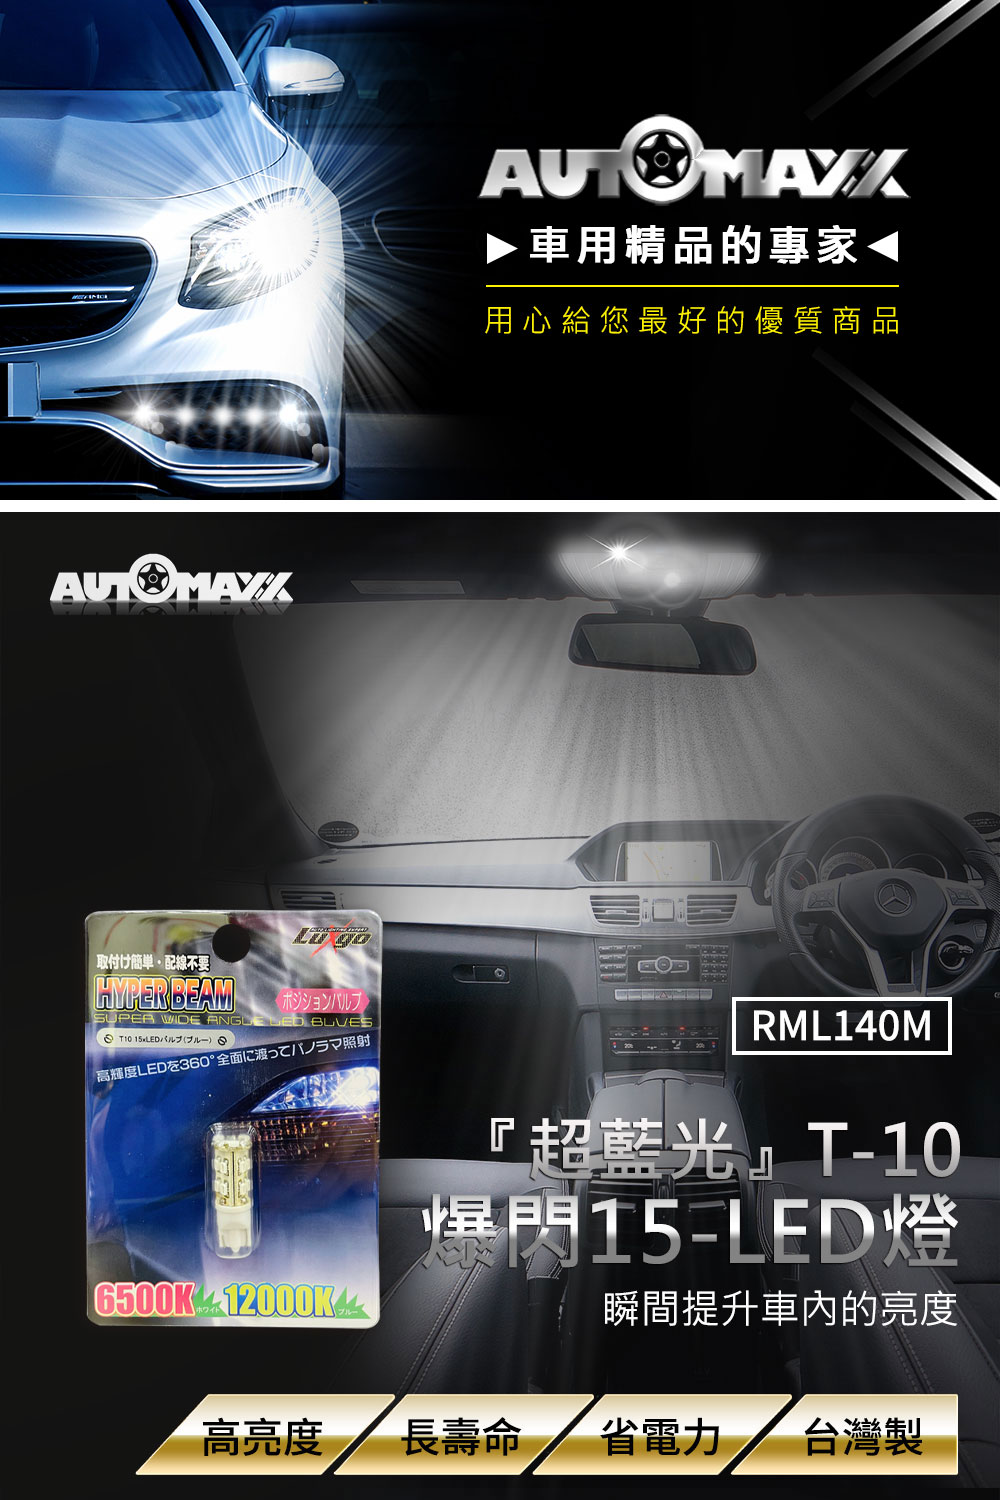 Automaxx Rml140m 超藍光 T 10爆閃15 Led燈 Momo購物網